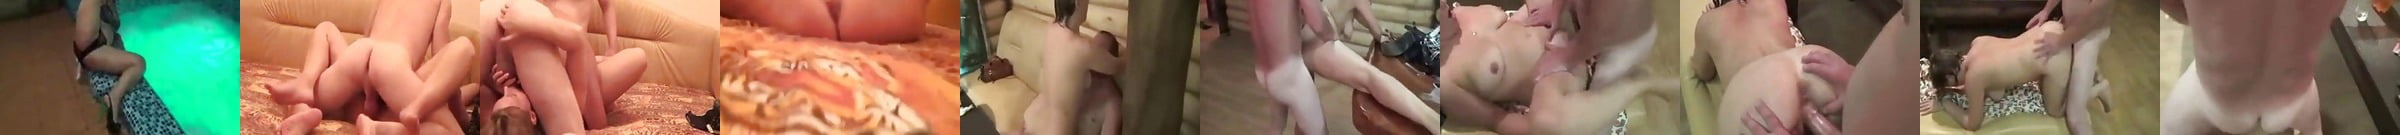 Sauna Porn Videos Sweaty Sex With Babes Xhamster